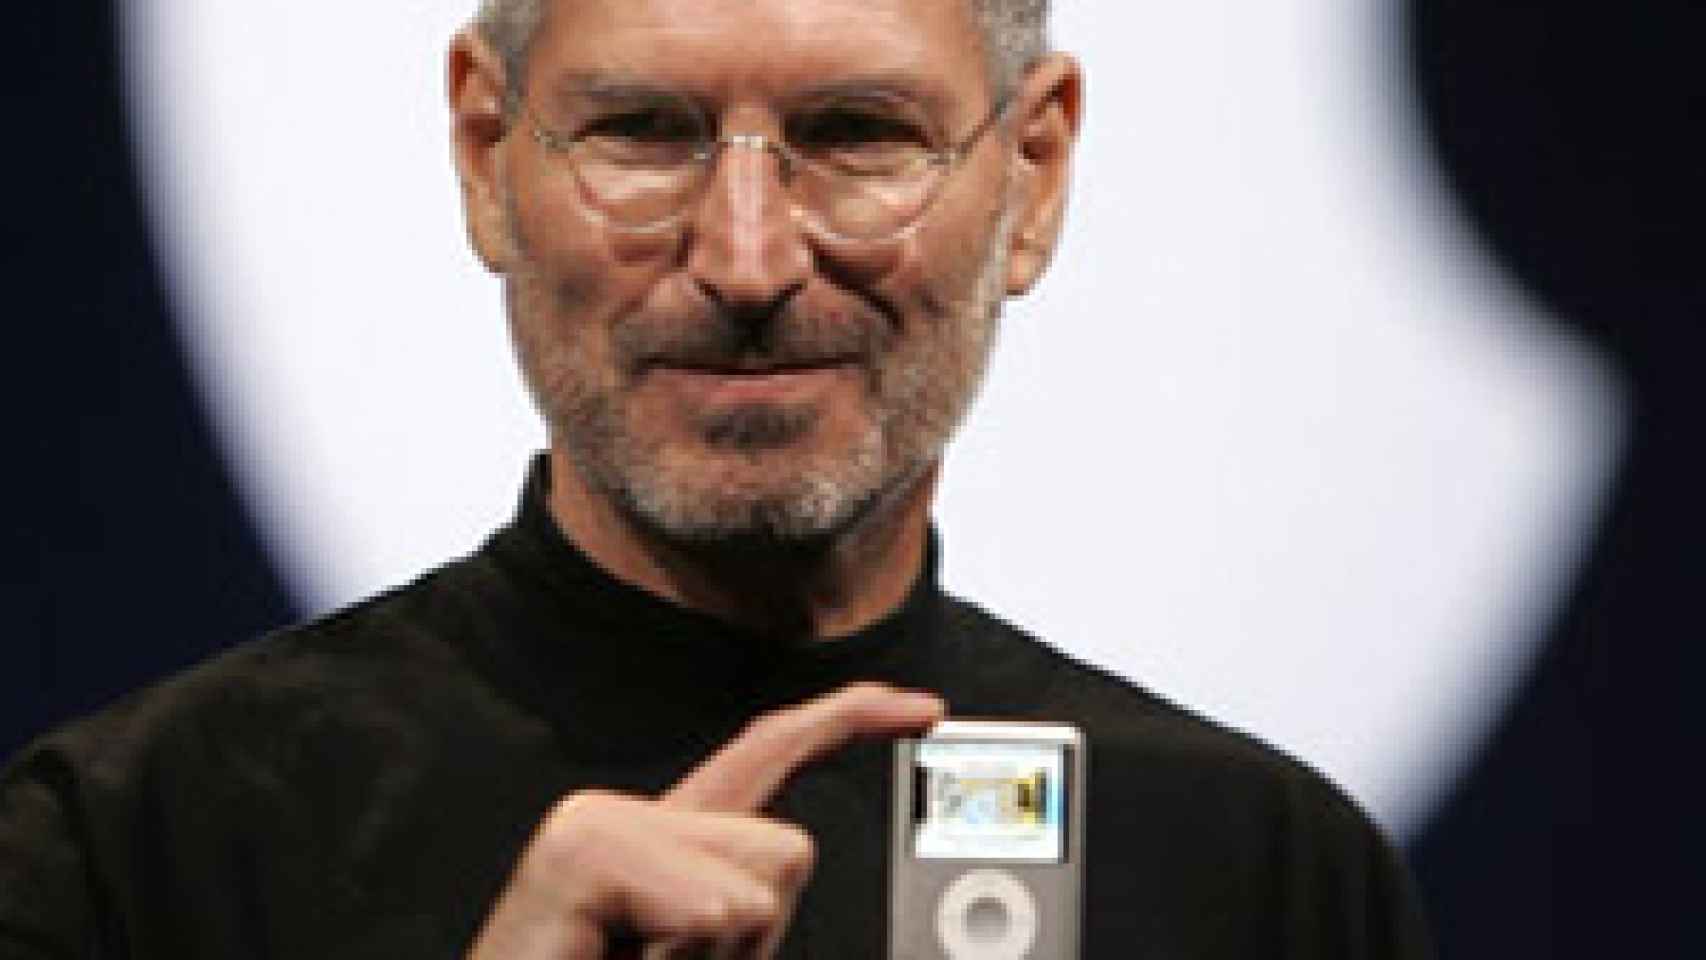 Image: Steve Jobs. La biografía definitiva